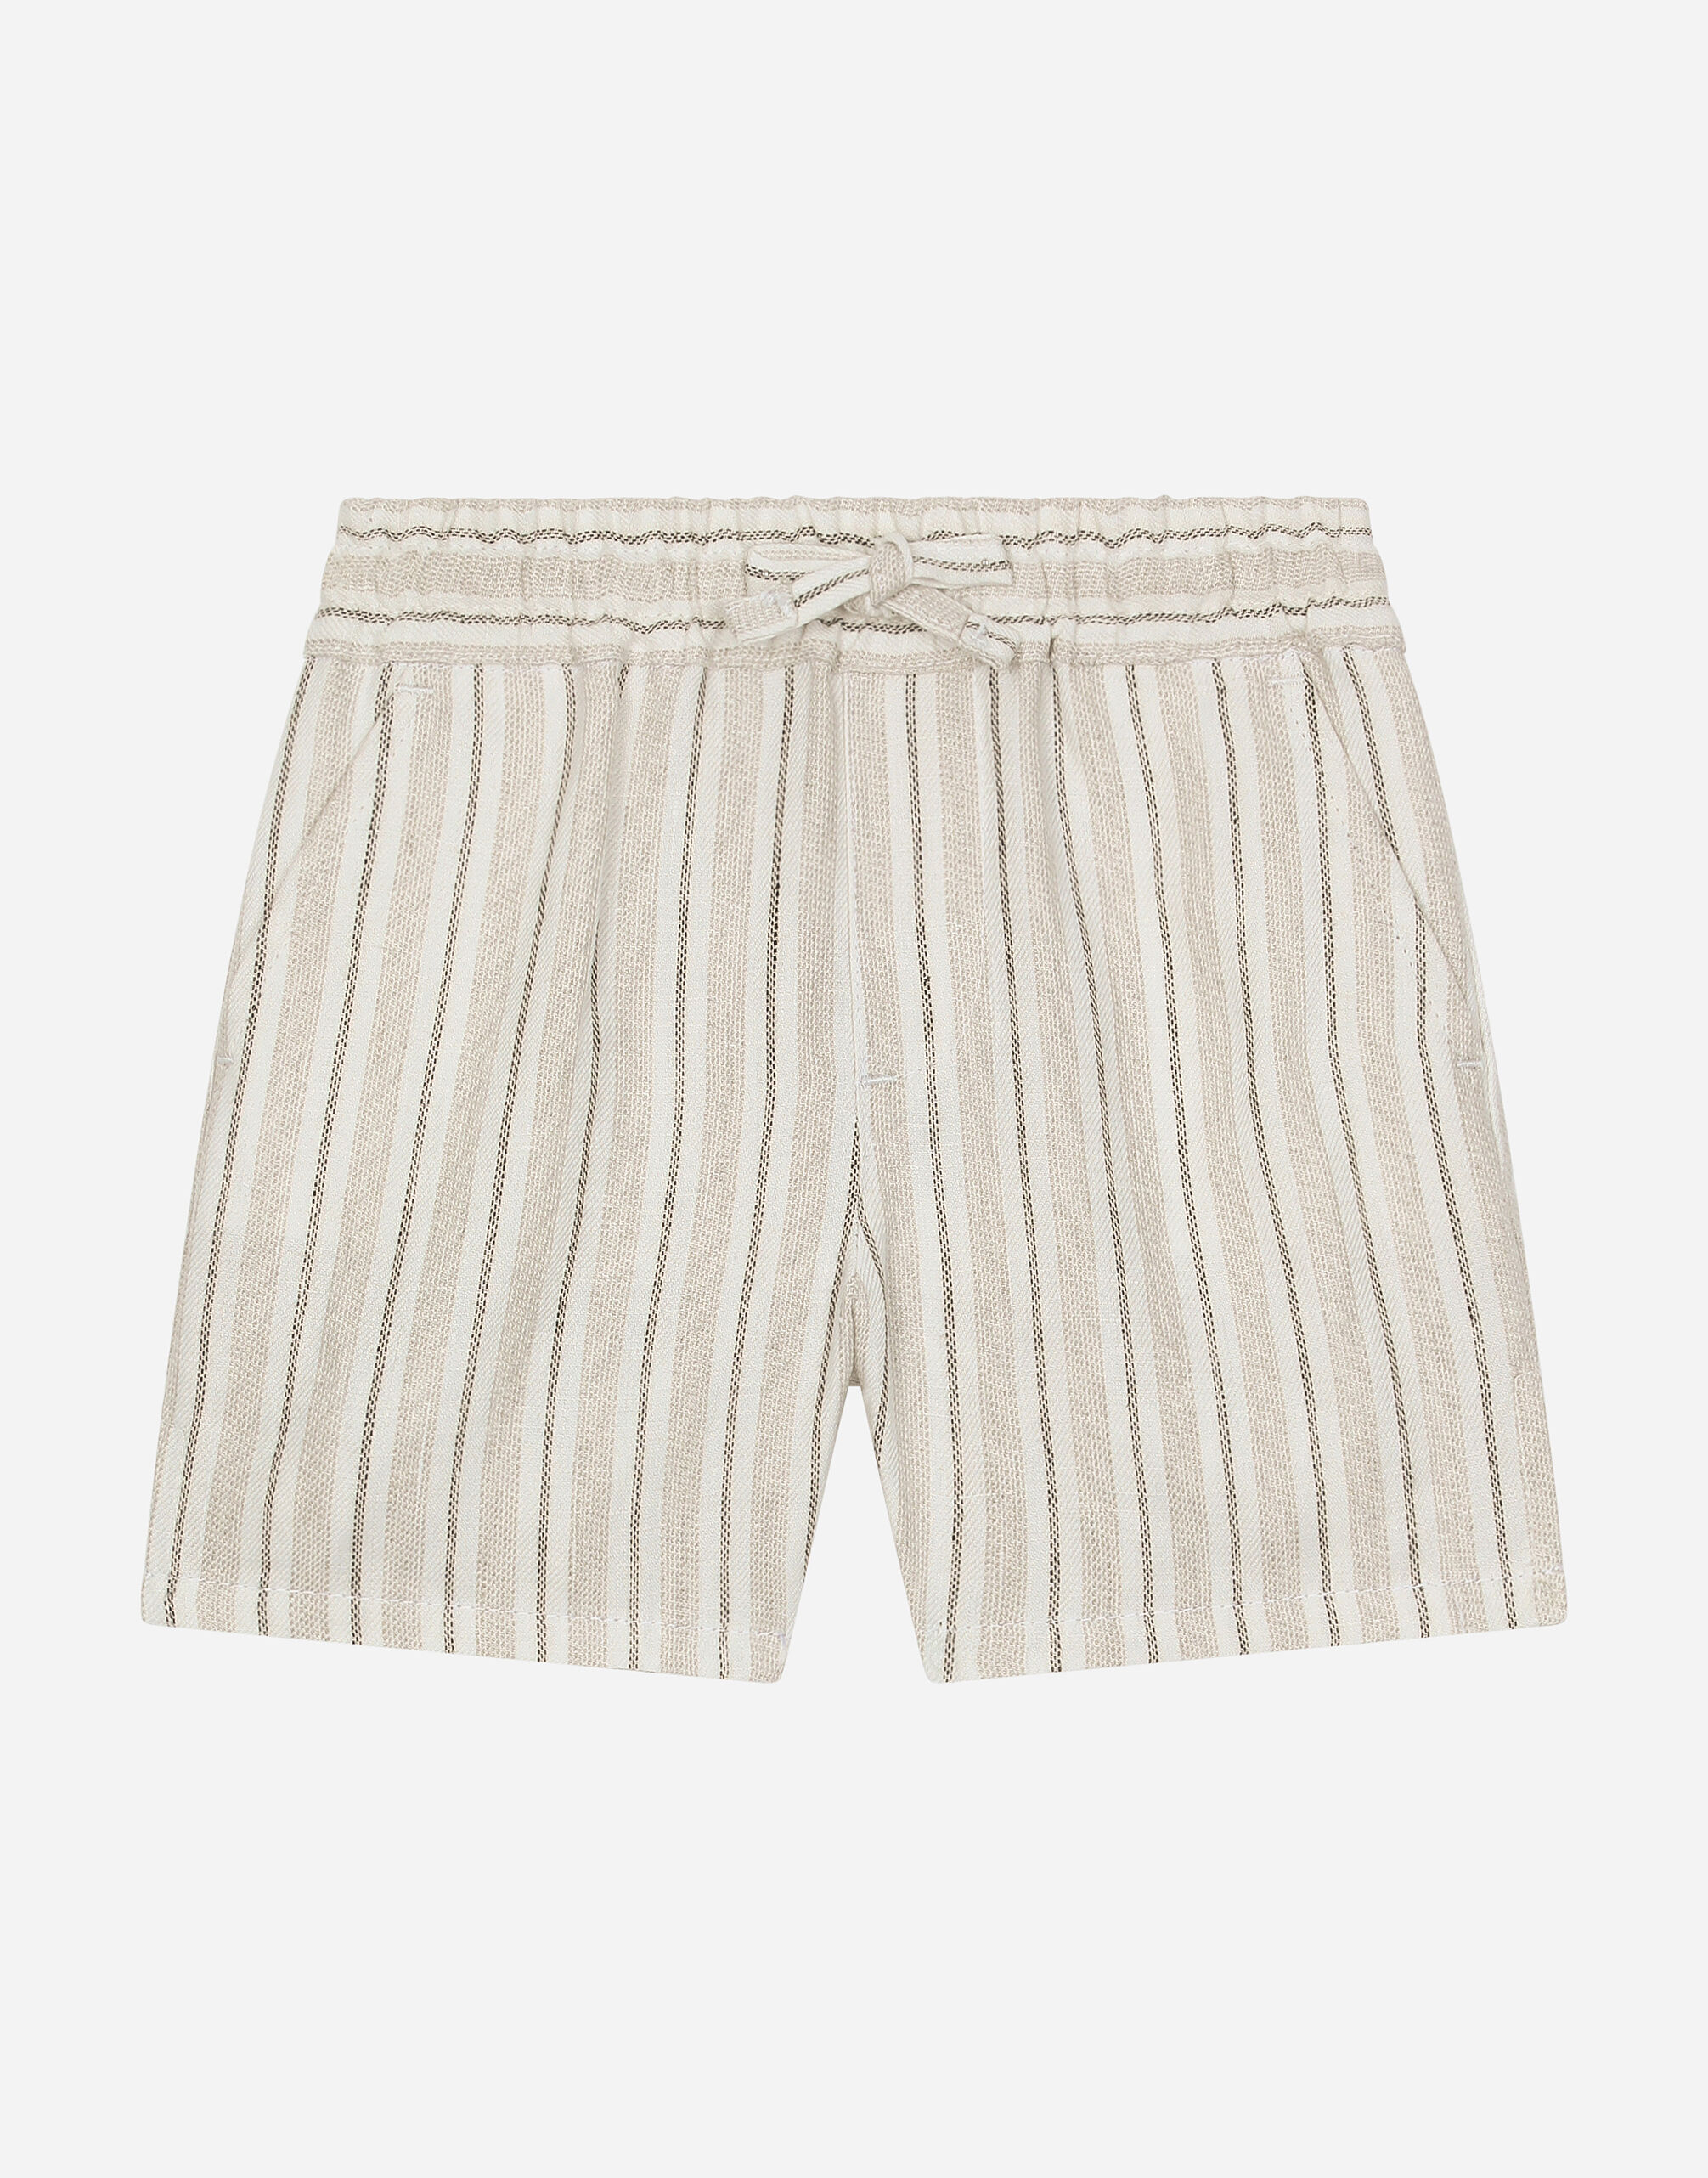 Dolce & Gabbana Striped linen shorts with branded label Print L1JQT8II7EI